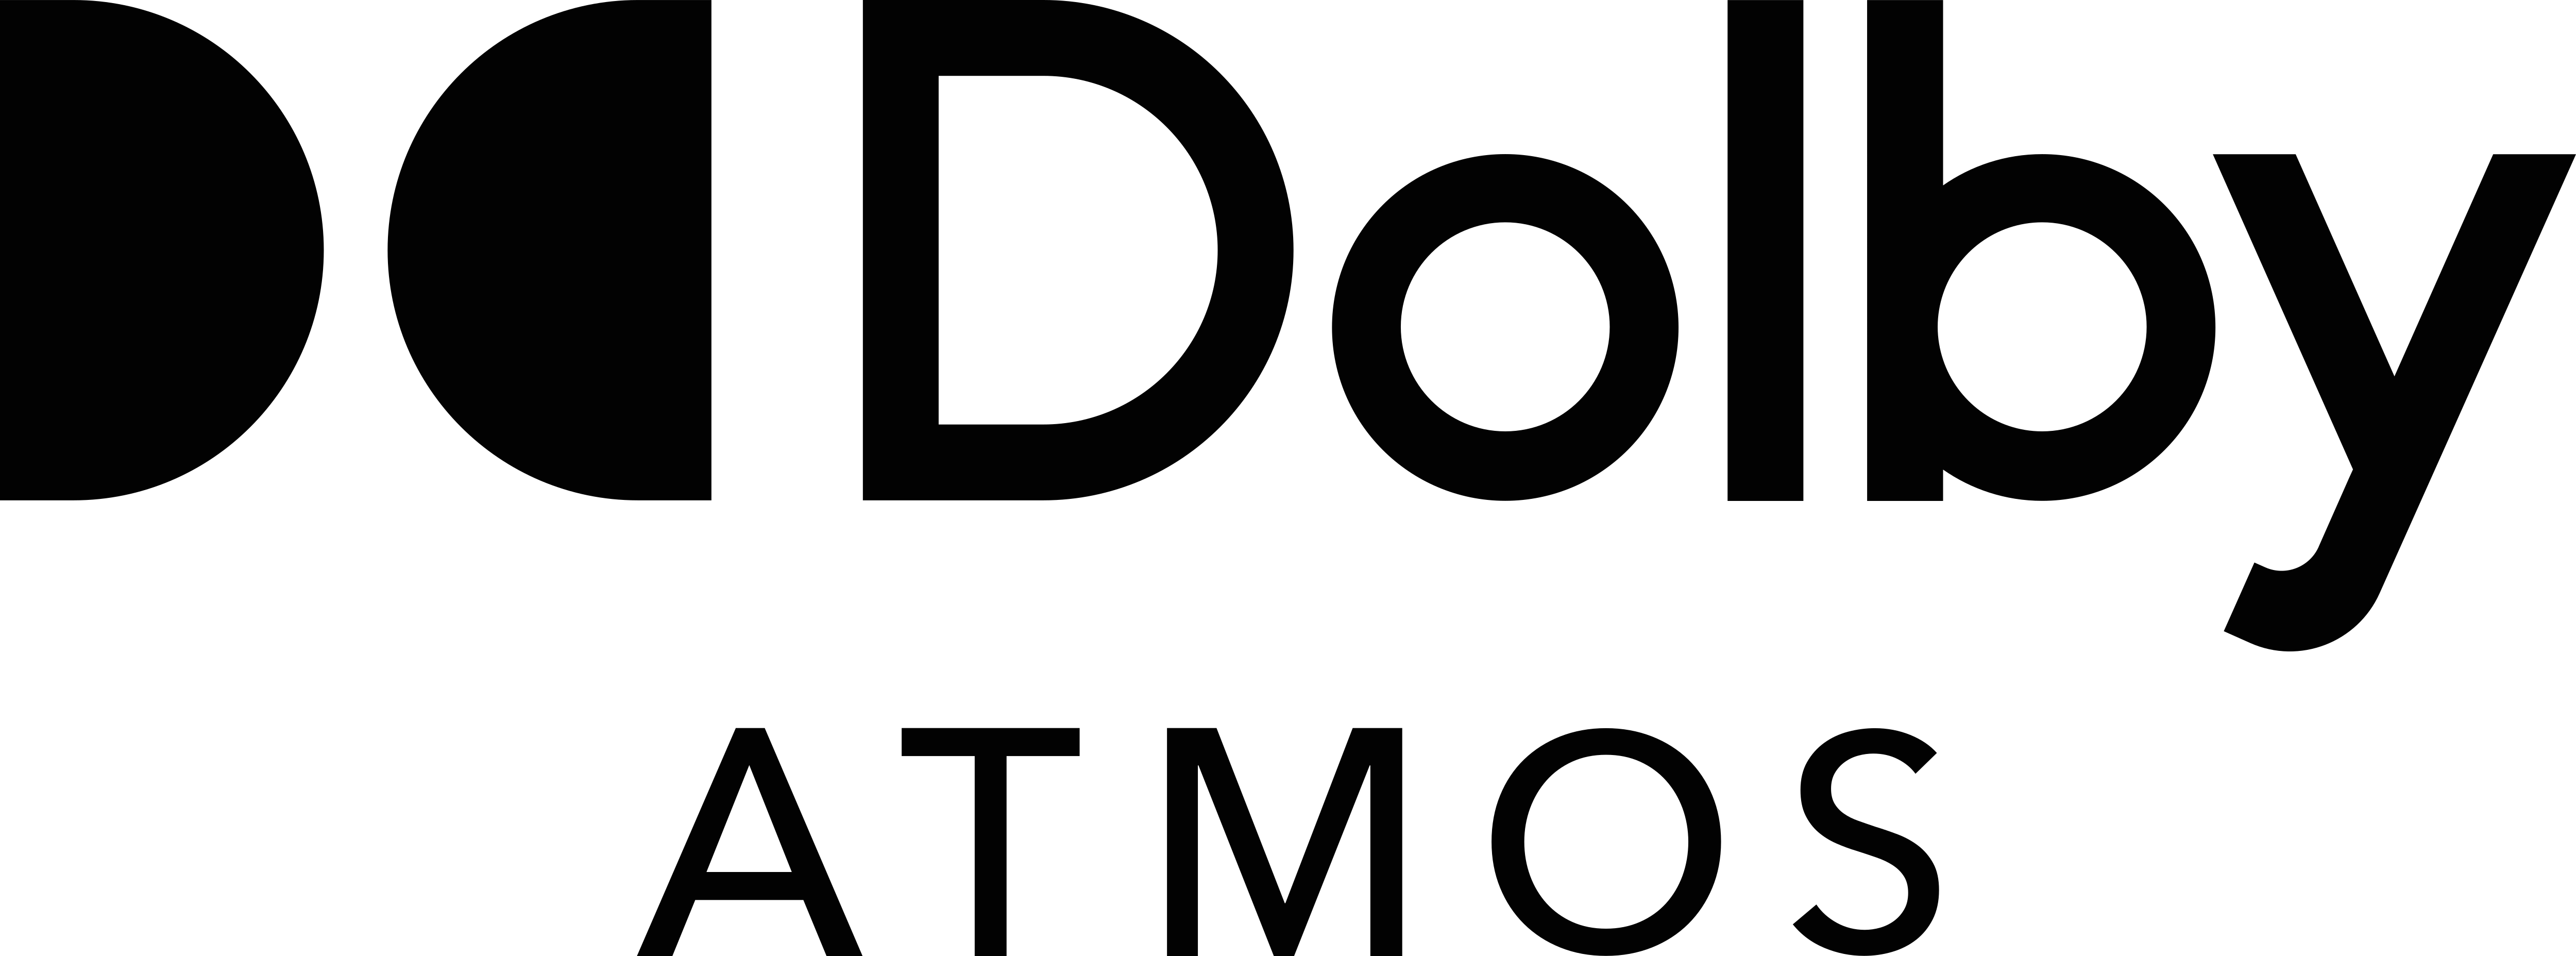 Dolby Atmos Logos Download